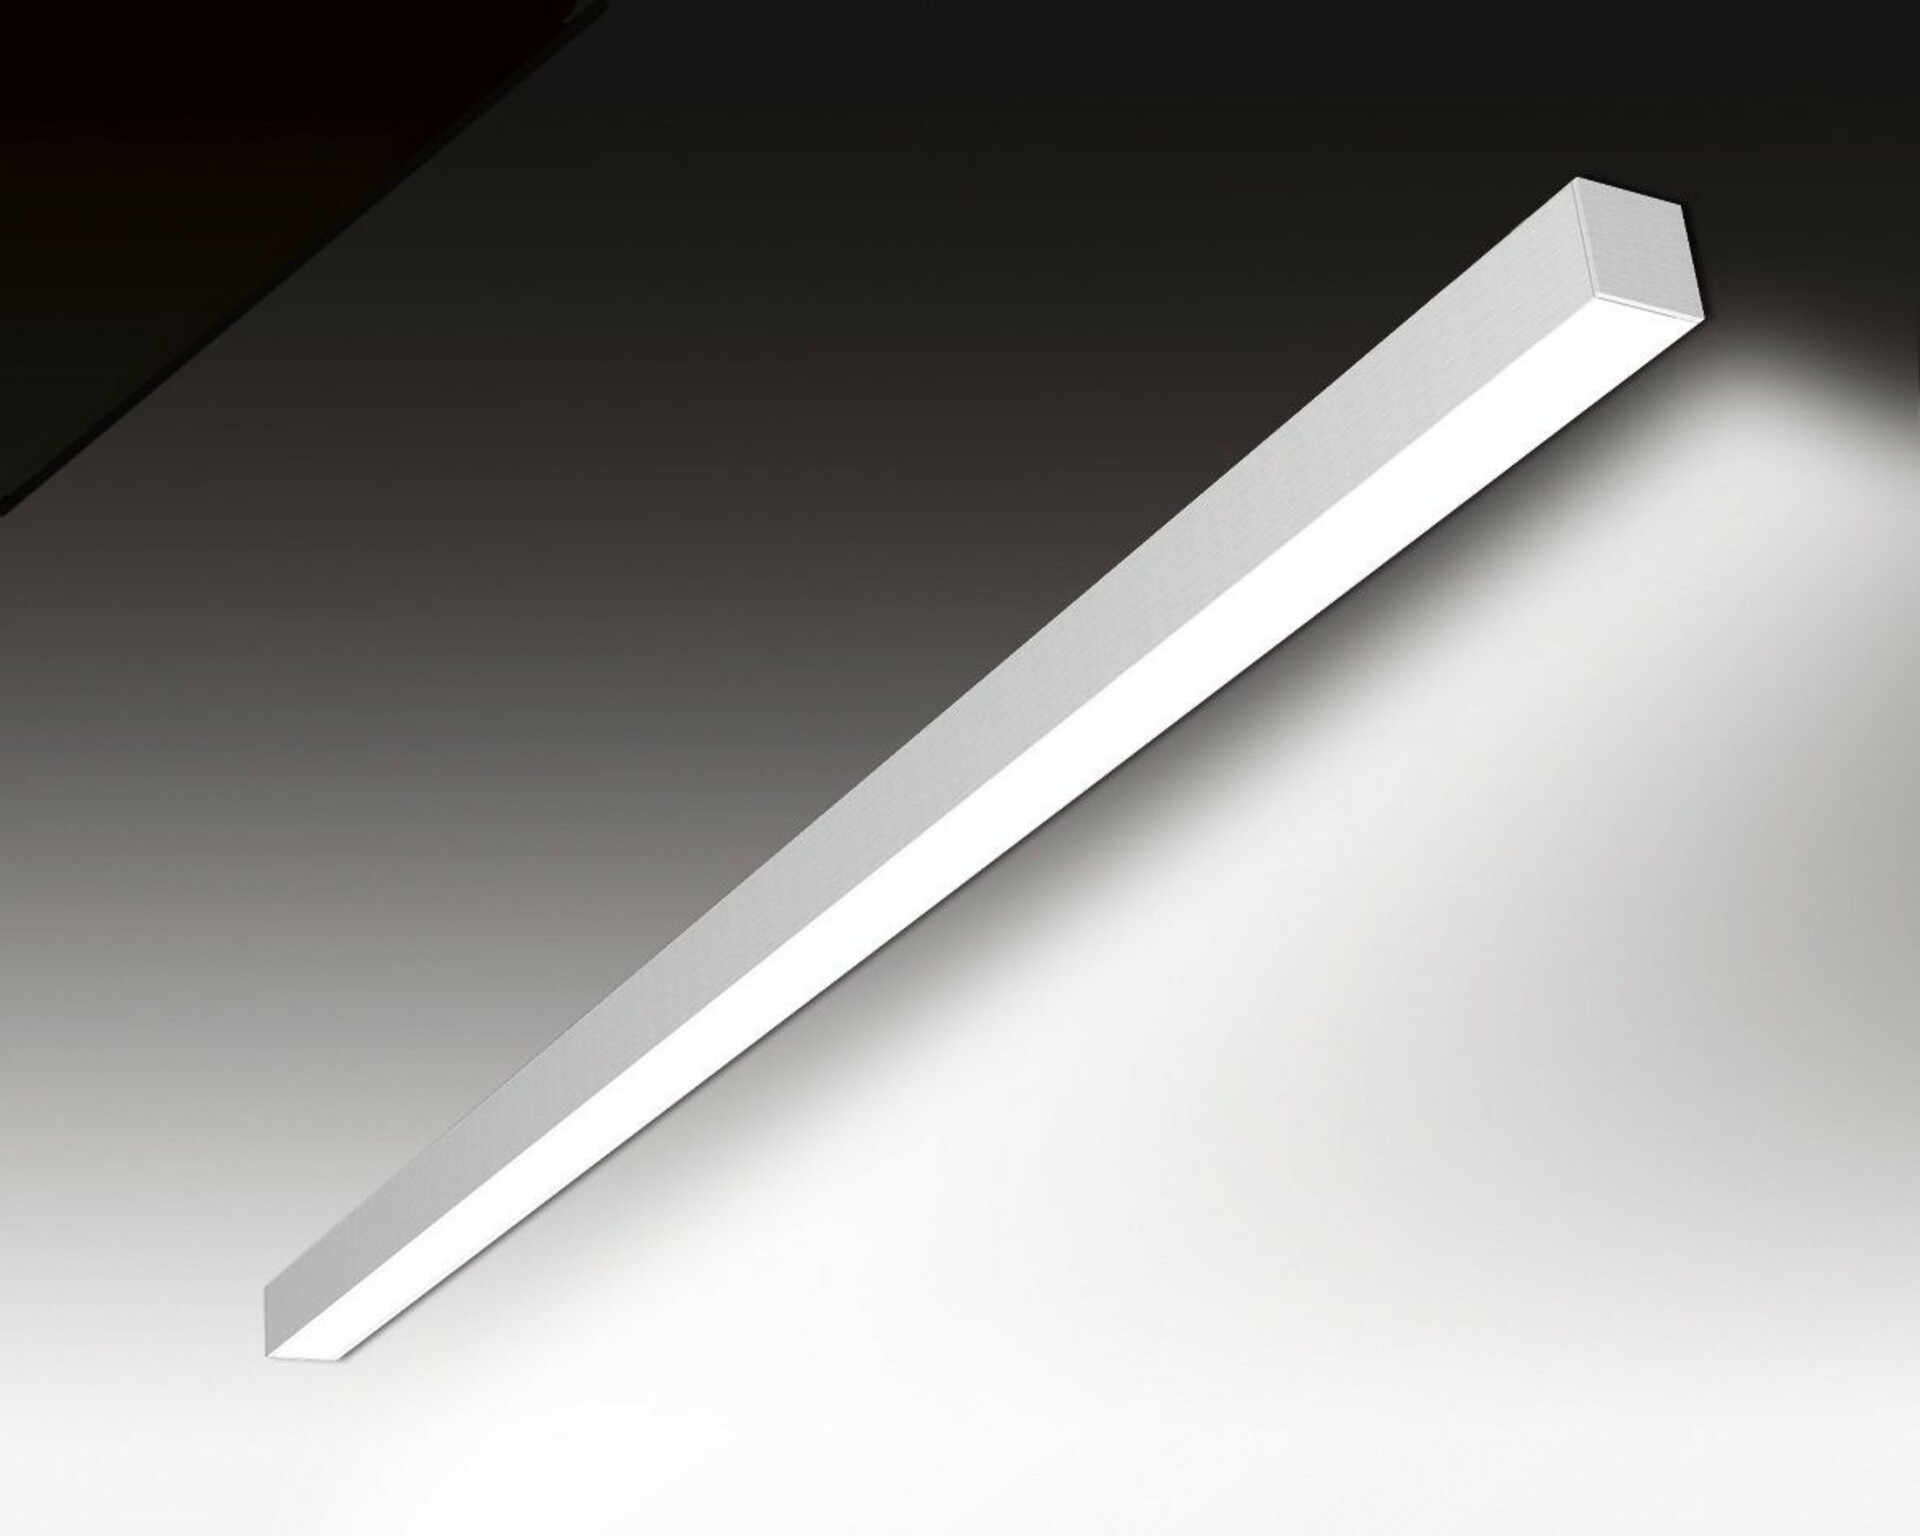 SEC Nástěnné LED svítidlo WEGA-MODULE2-DA-DIM-DALI, 18 W, eloxovaný AL, 1130 x 50 x 50 mm, 3000 K, 2400 lm 320-B-111-01-00-SP